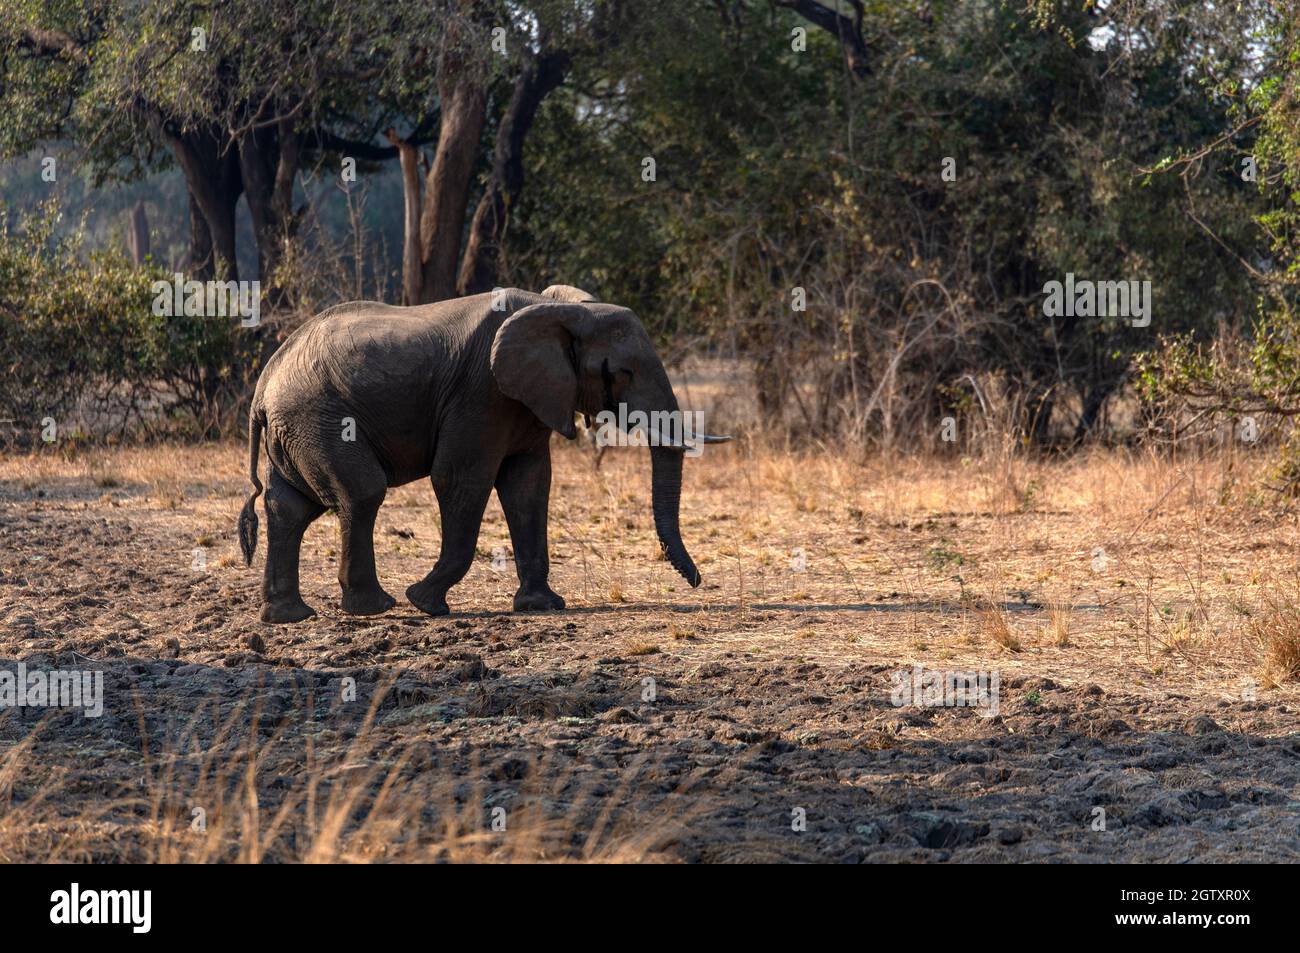 Full Length Of Elephant Walking Stock Photo